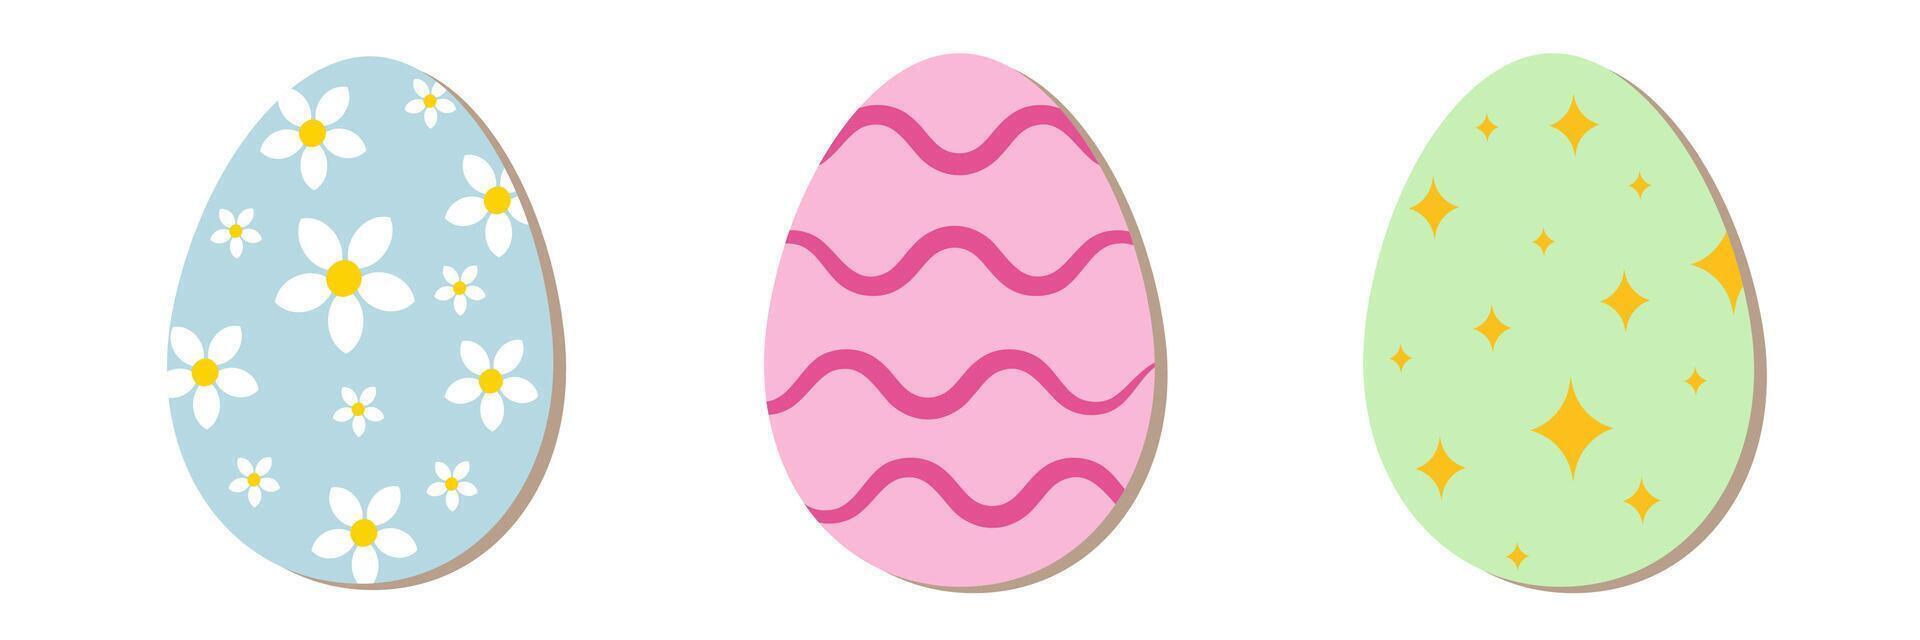 vistoso aislado Pascua de Resurrección huevos, vector colocar. sencillo plano Pascua de Resurrección huevos.